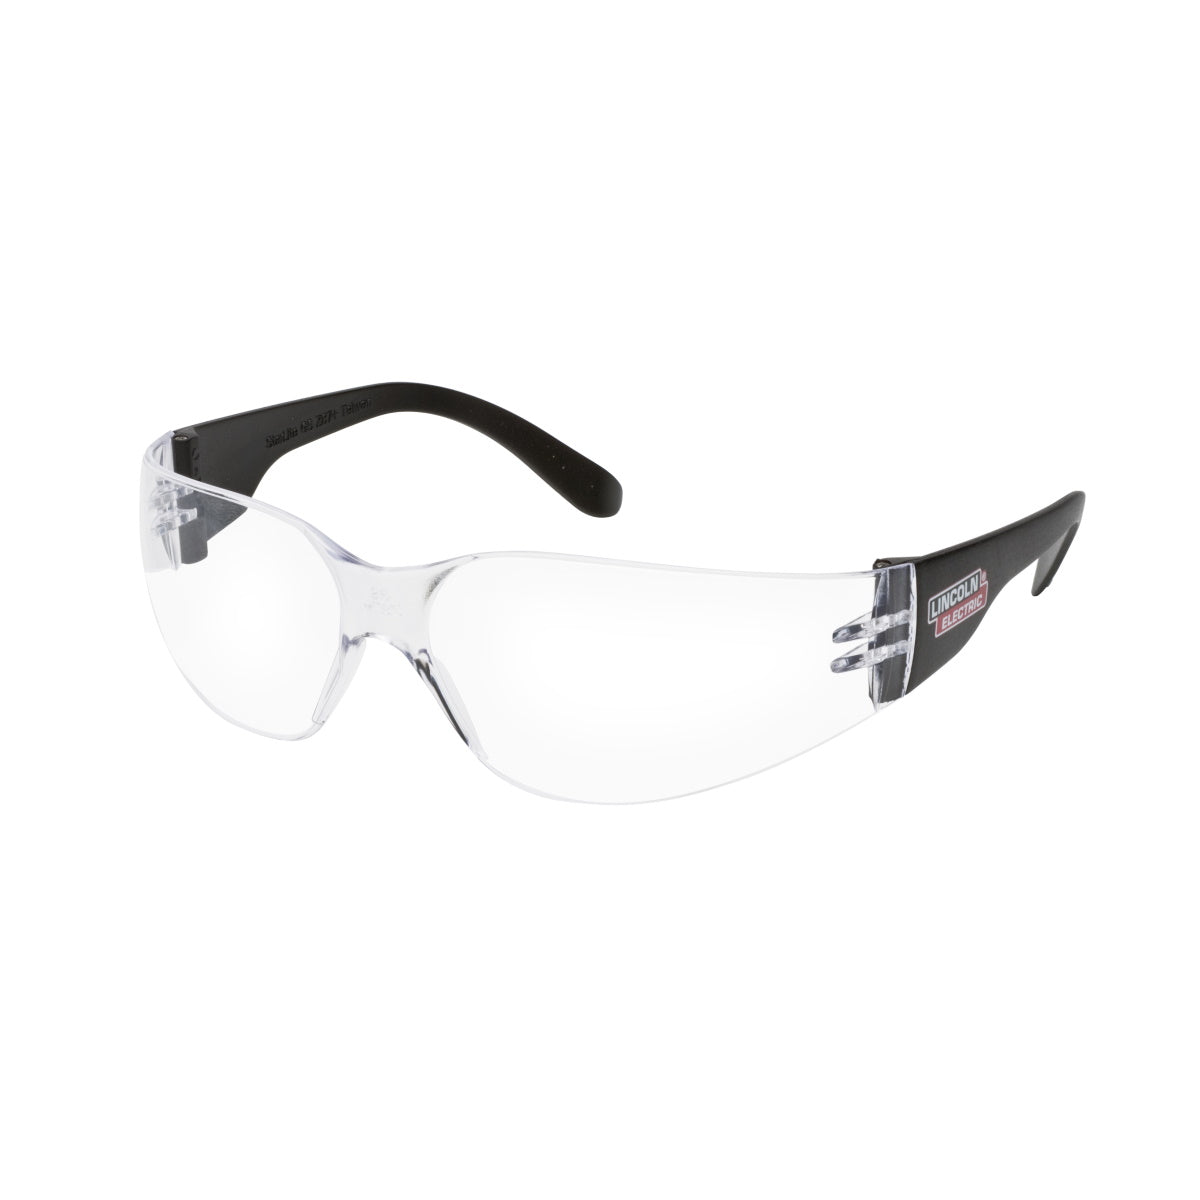 Lincoln Starlite Welding Safety Glasses (K2965-1)